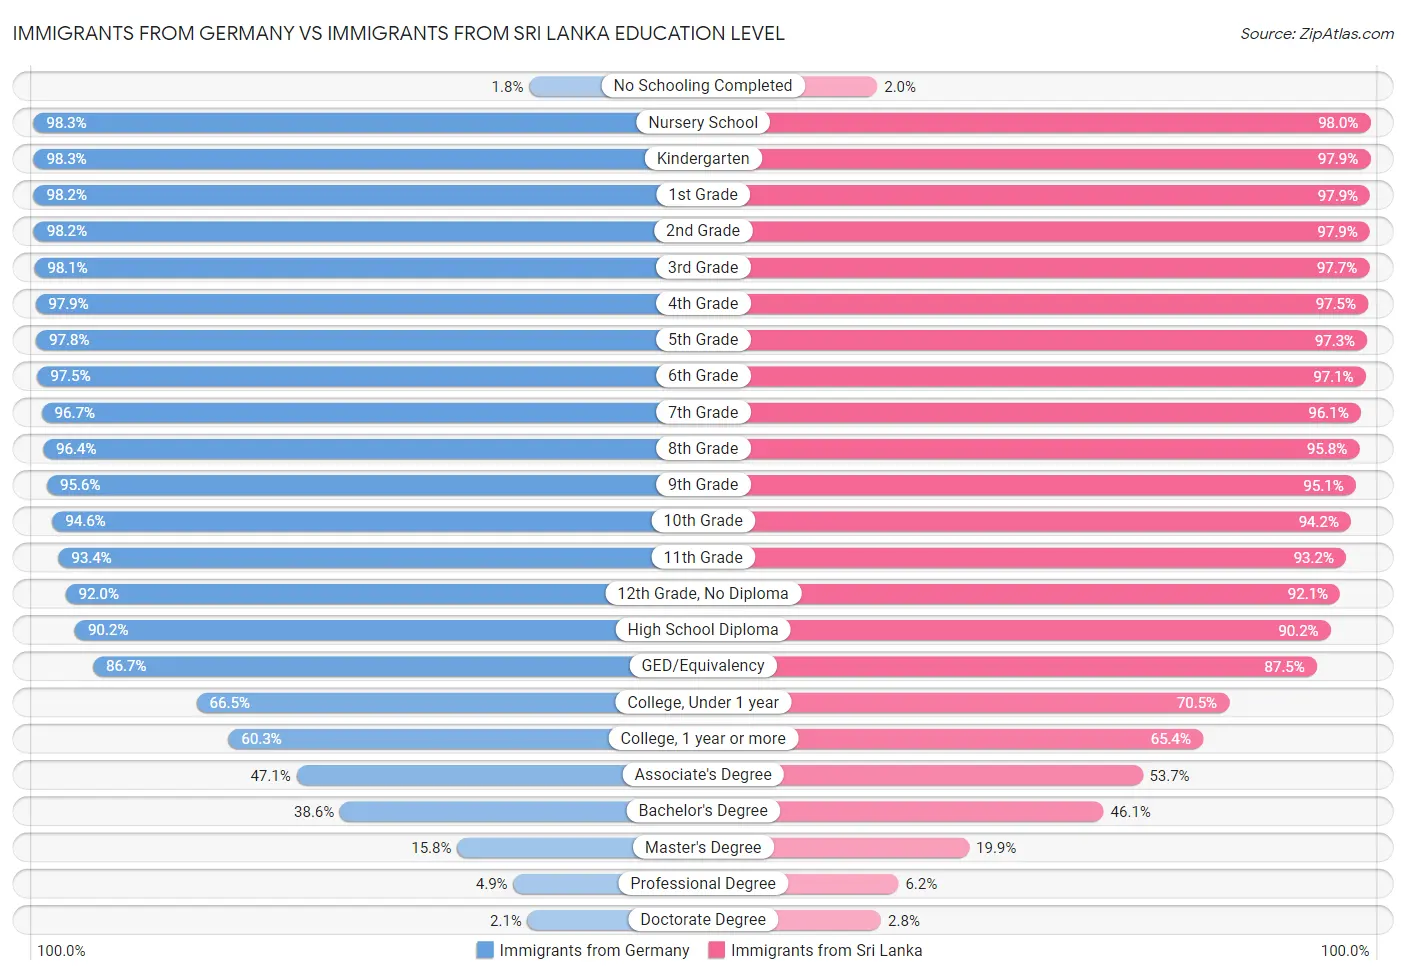 Immigrants from Germany vs Immigrants from Sri Lanka Education Level